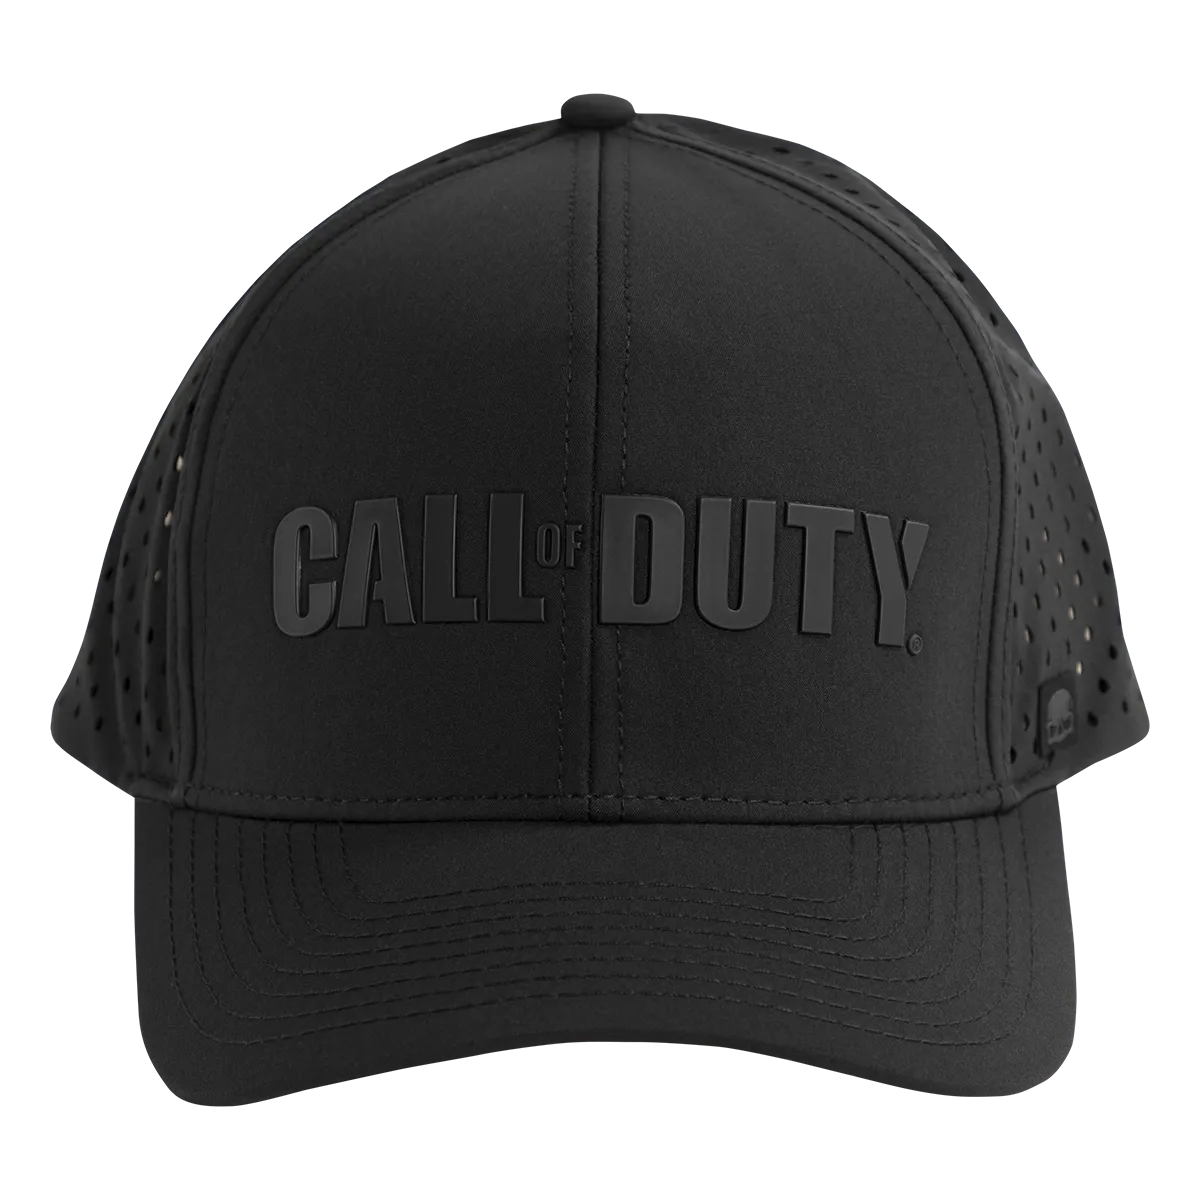 Call of Duty Baseball Cap "Stealth" Black Cover